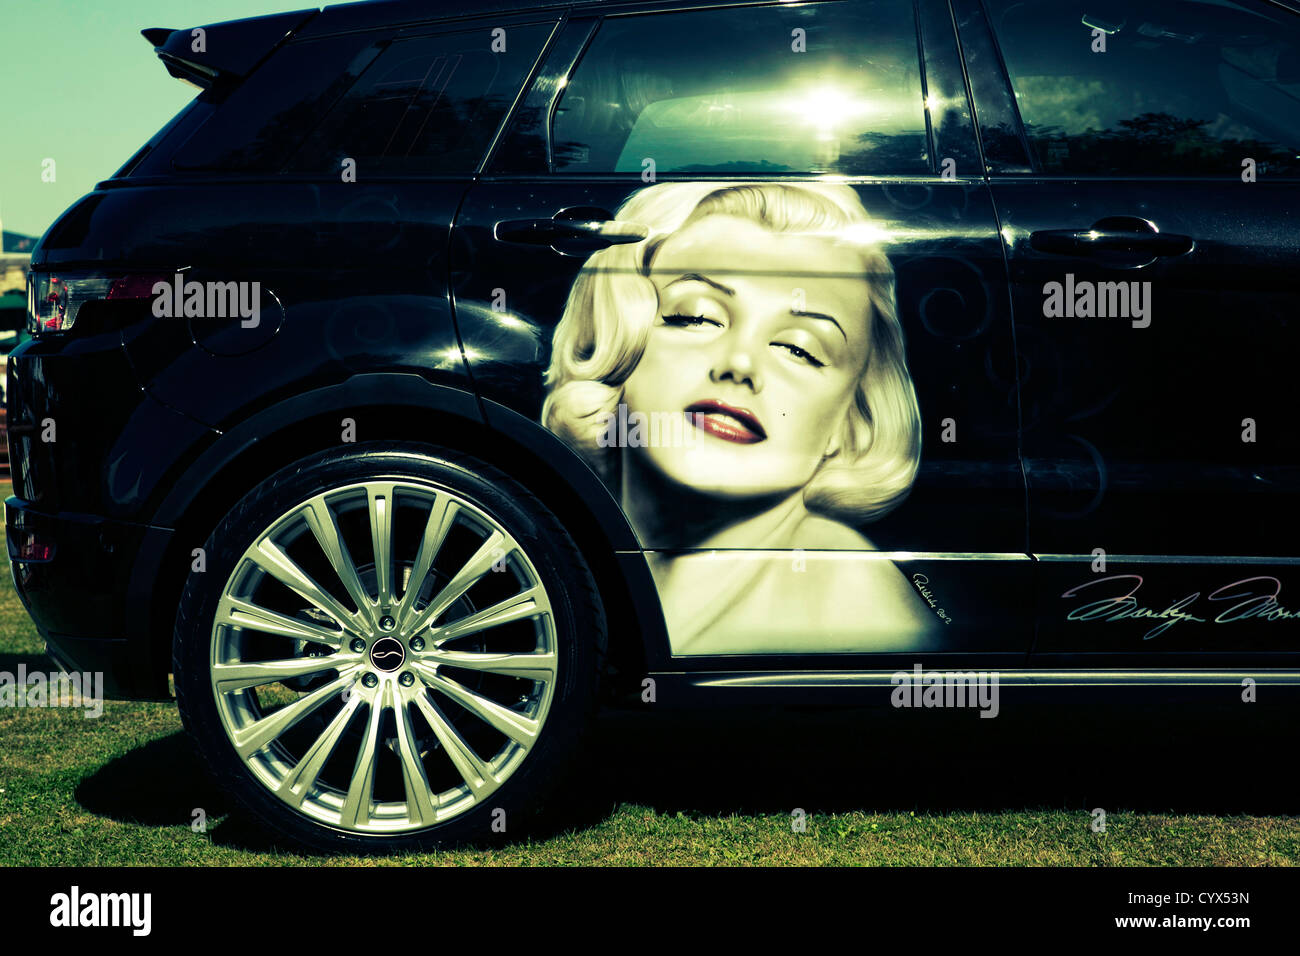 Custom Range Rover Evoque with Marilyn Monroe portrait painting on the rear door Stock Photo